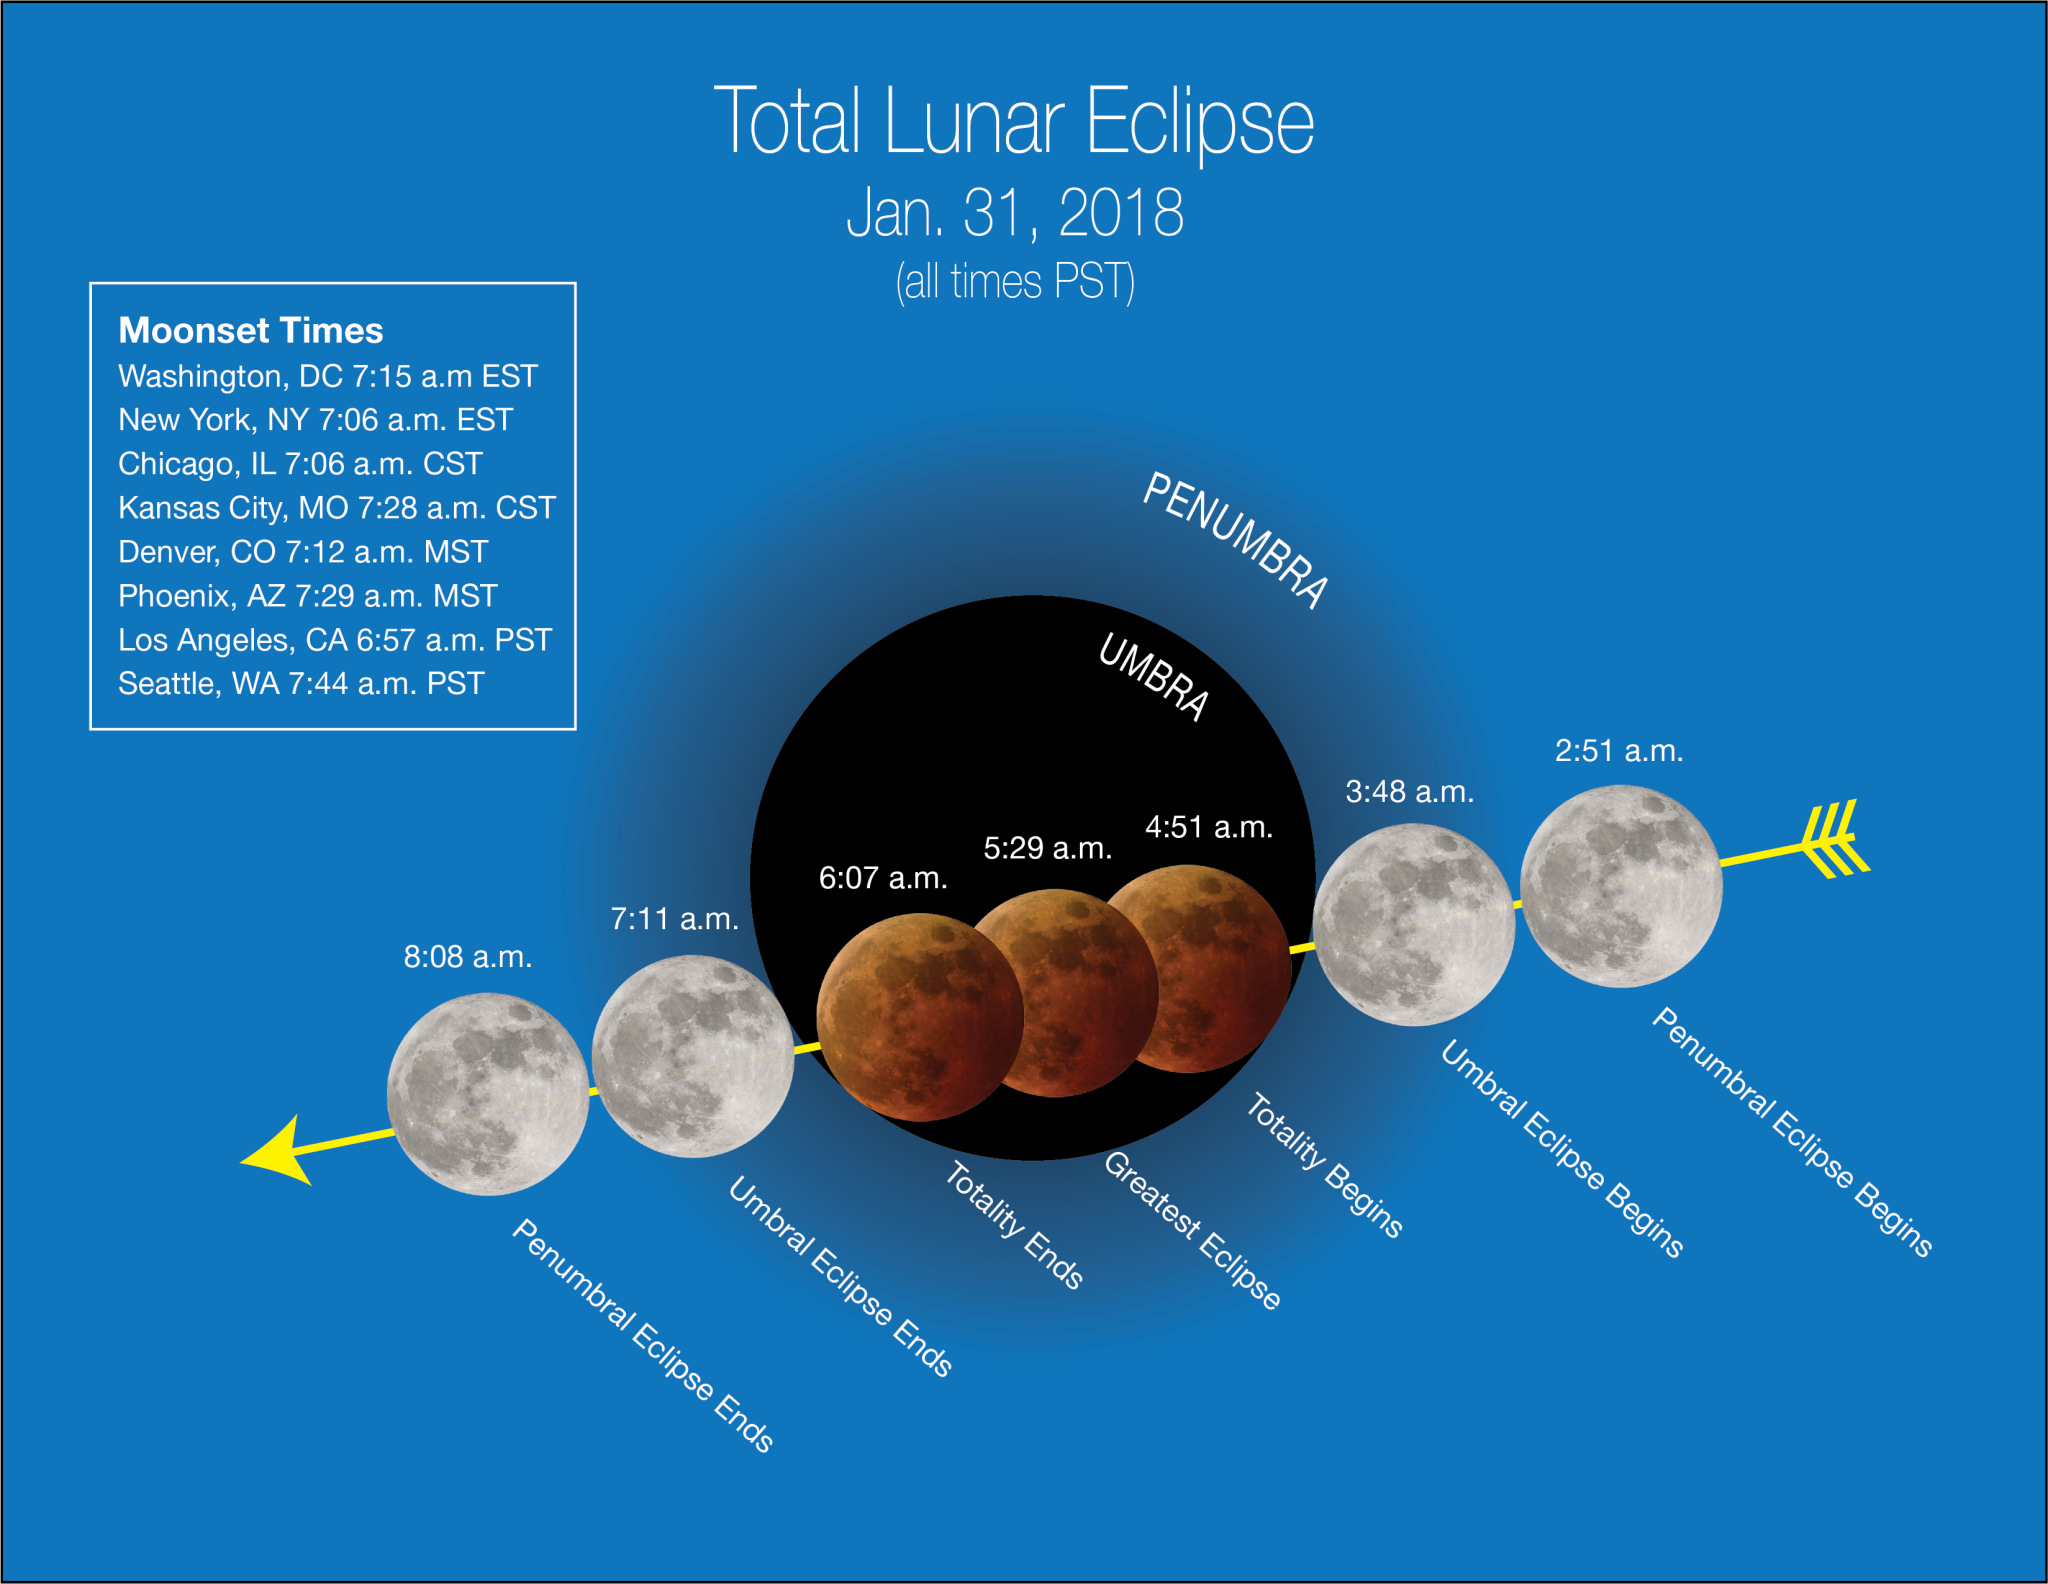 Total Lunar Eclipse, Jan. 31, 2018